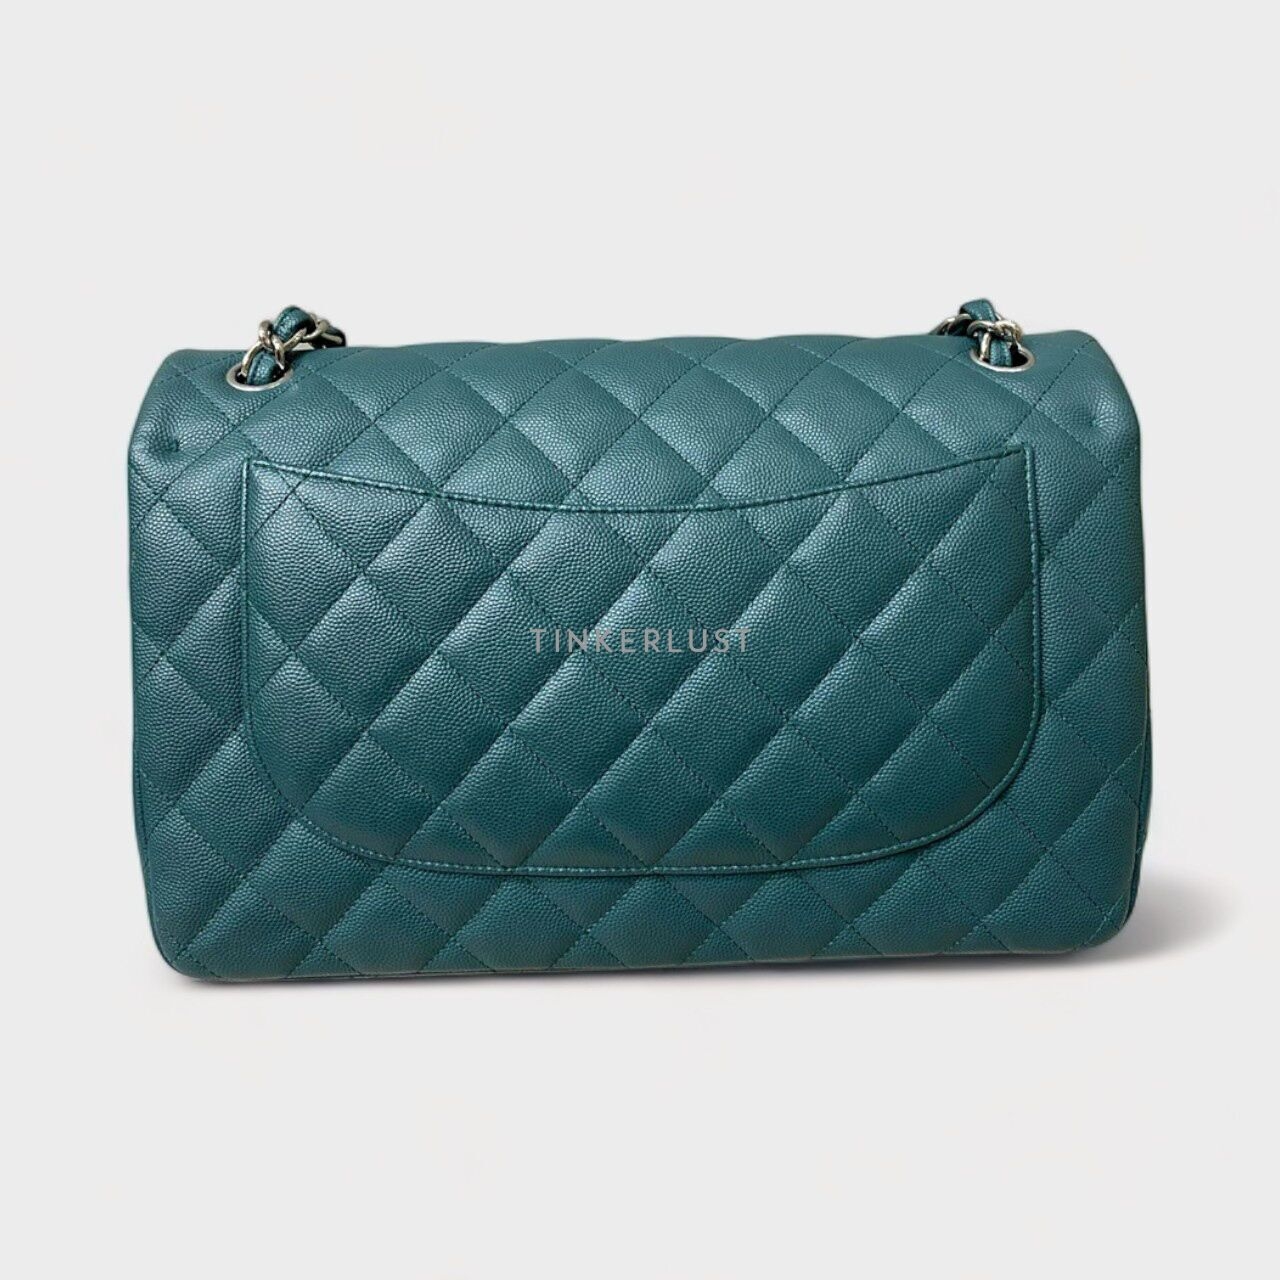 Chanel Classic Jumbo Double Flap Blue Turquoise Caviar #24 SHW Shoulder Bag